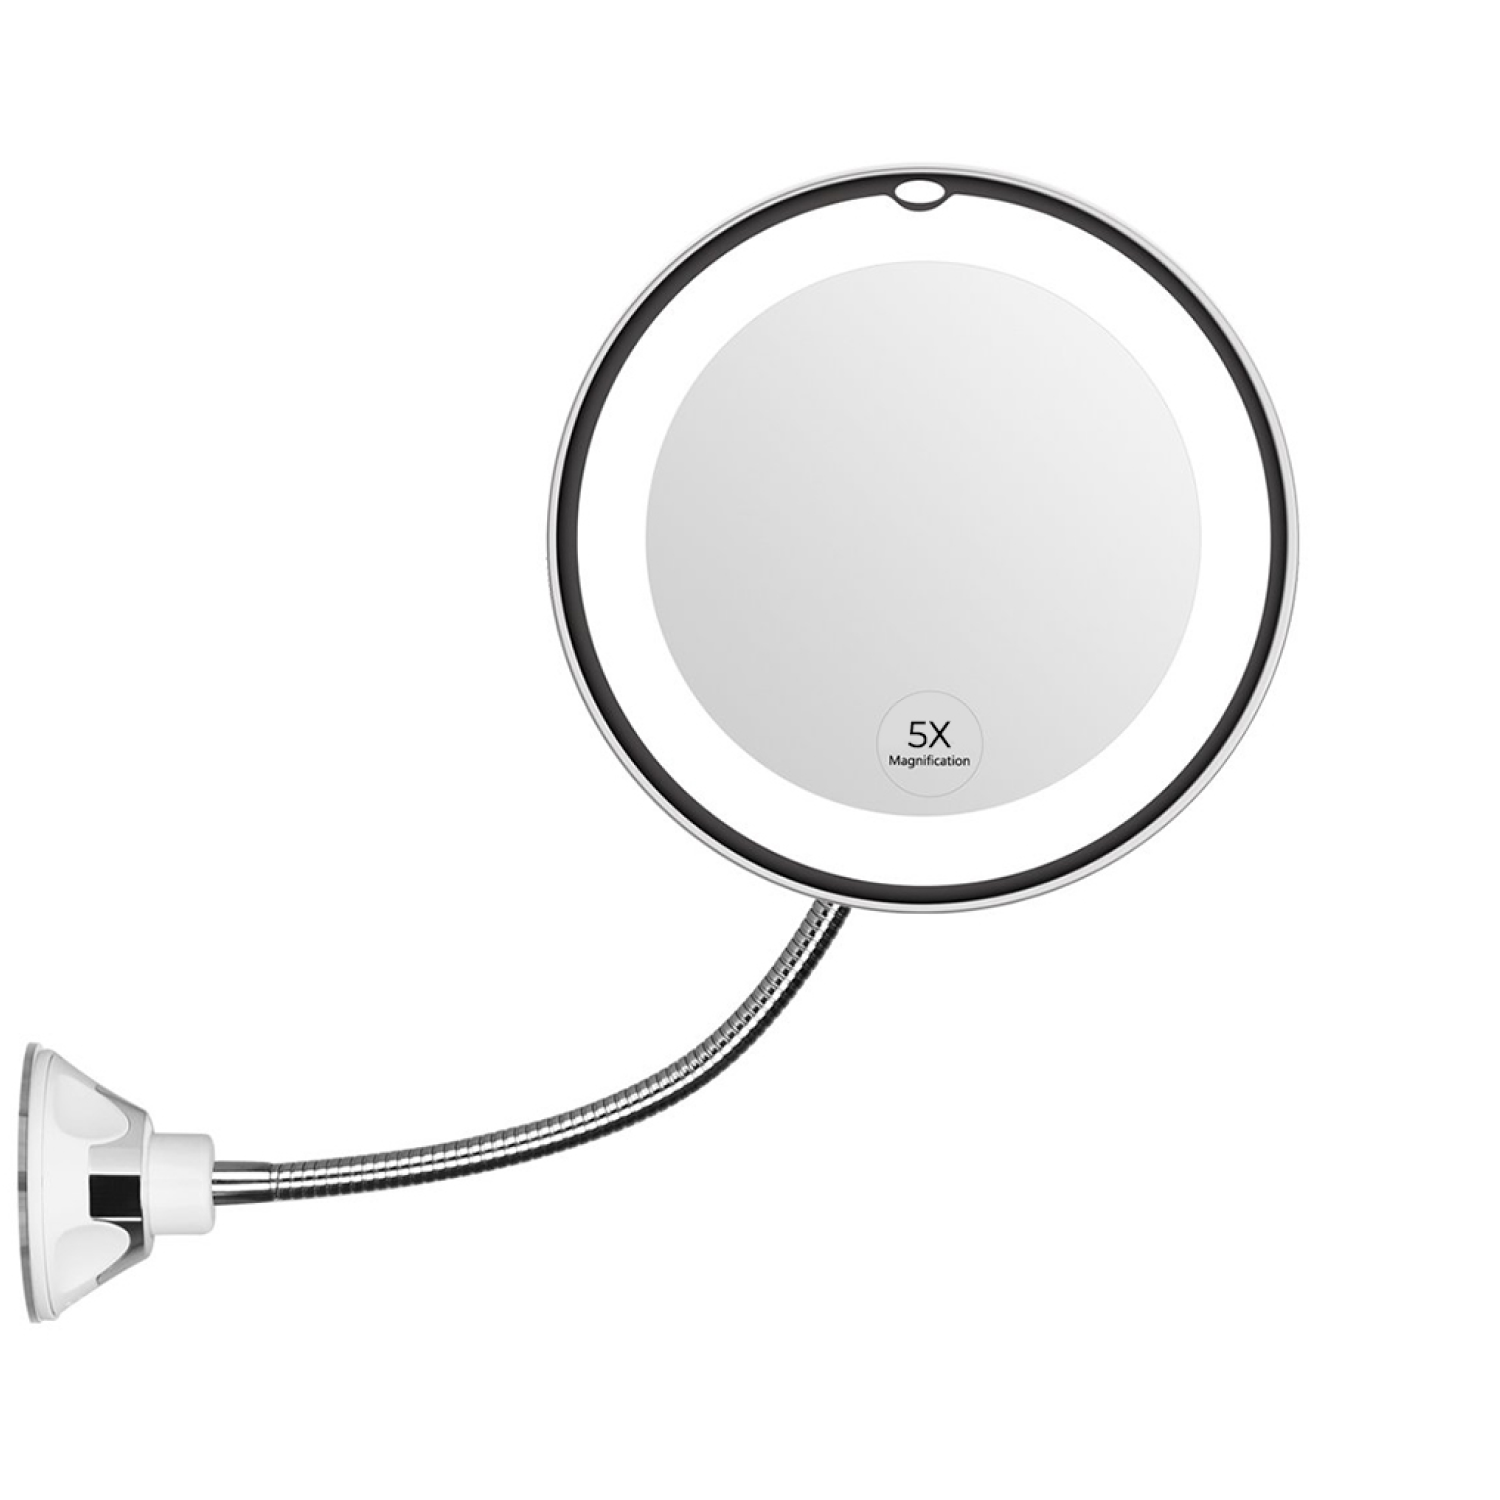 Зеркало косметологическое CleverCare с подсветкой и с гибкой штангой 5Х 6.7 - фото 1